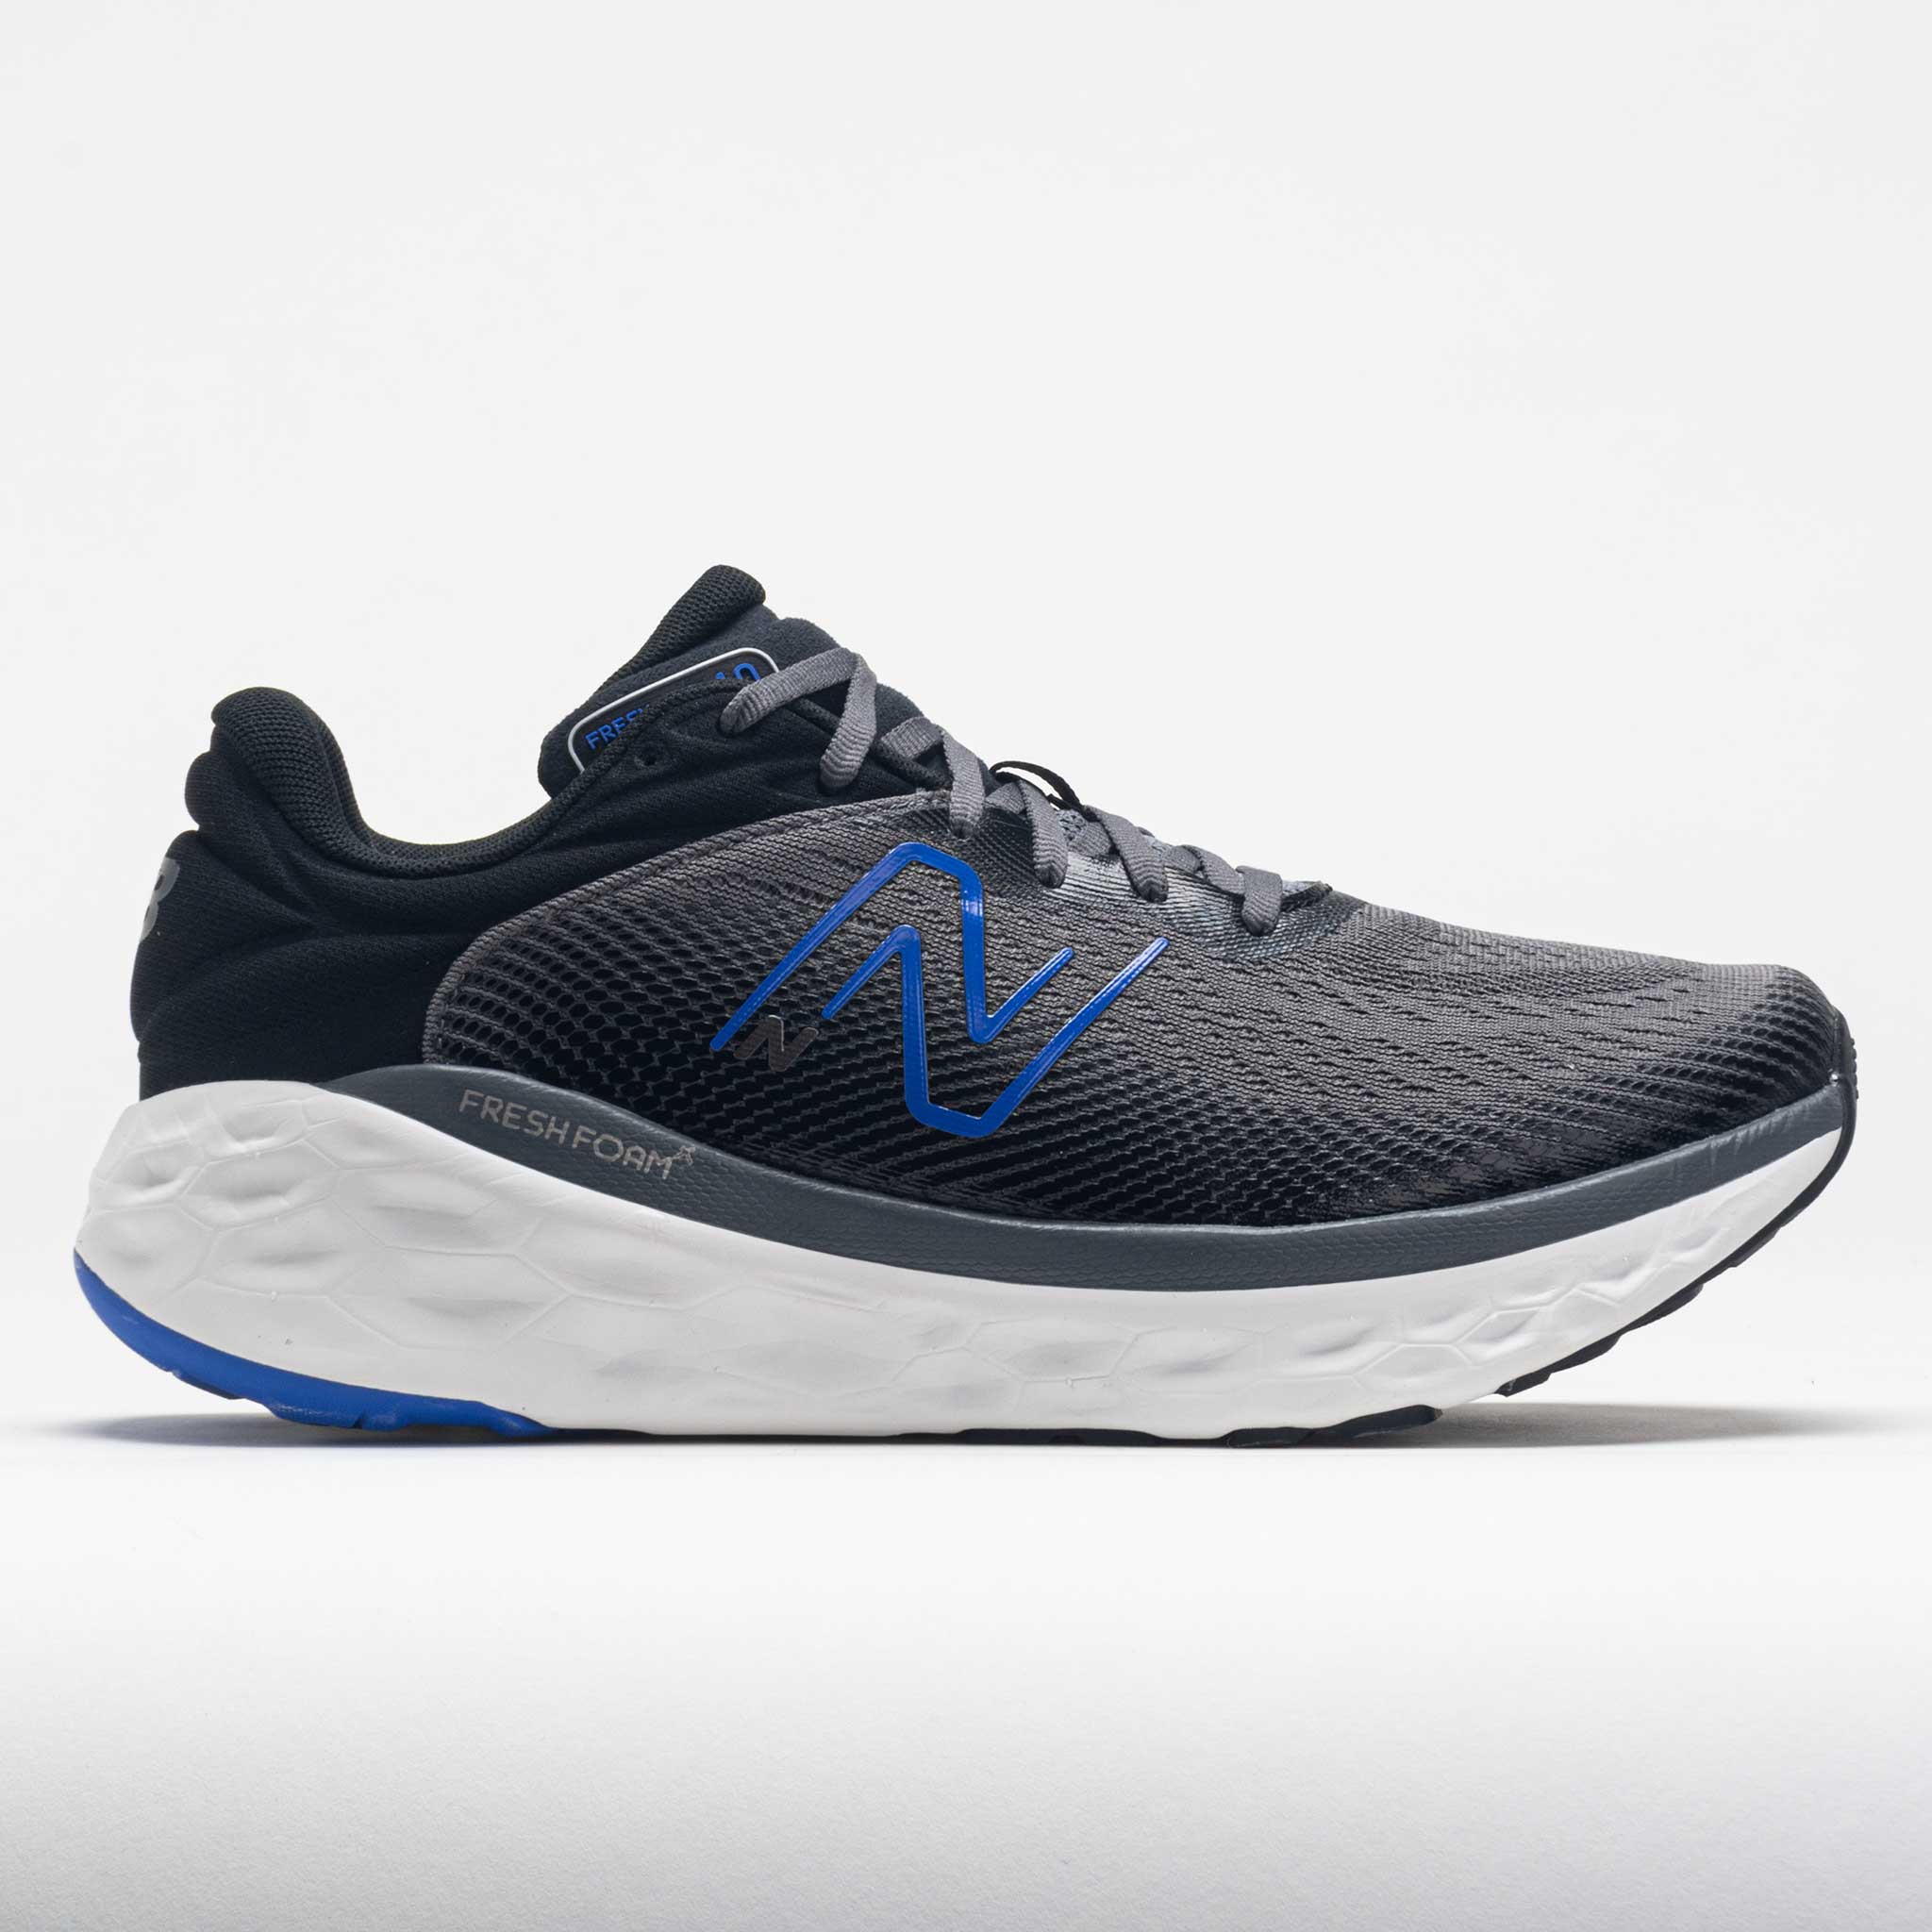 New Balance Fresh Foam X 840v1 Men's Running Shoes Castlerock/Marine Blue/Black Size 12.5 Width D - Medium